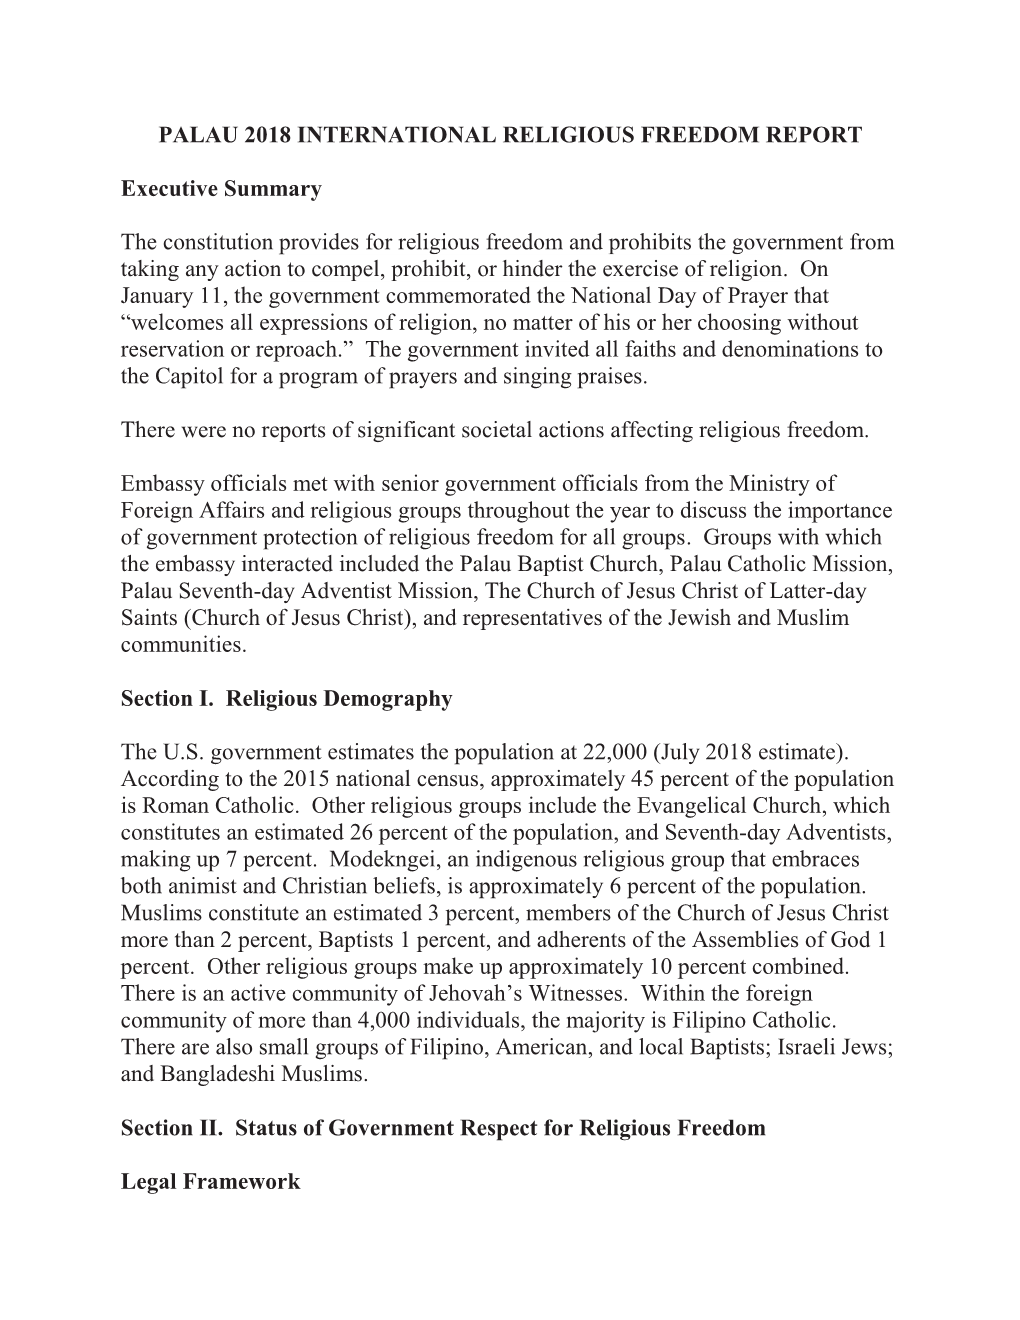 Palau 2018 International Religious Freedom Report